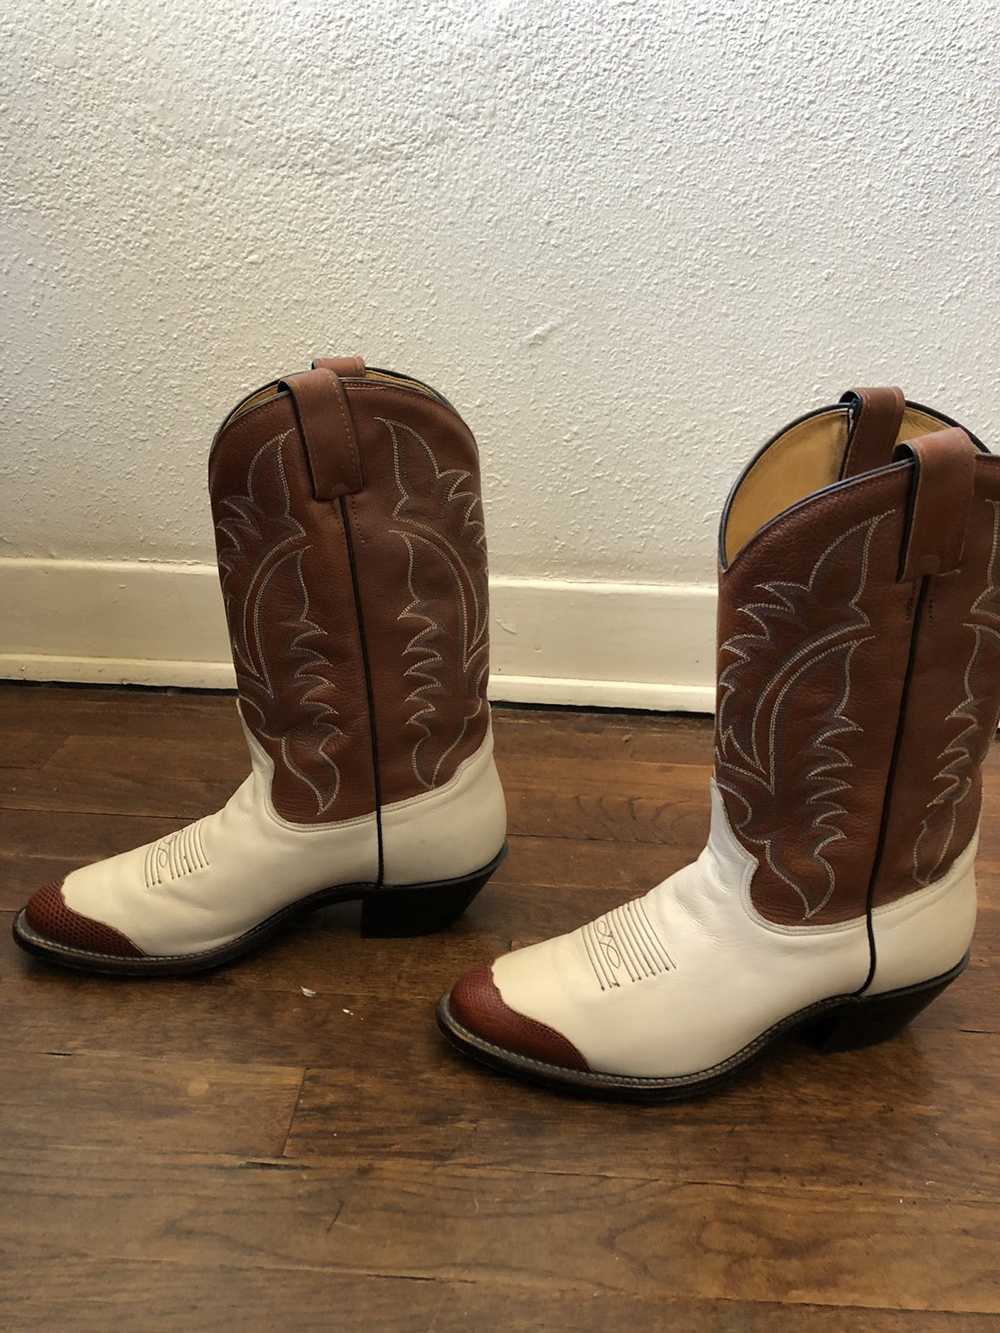 Vintage Tony lama boots excellent condition size … - image 1